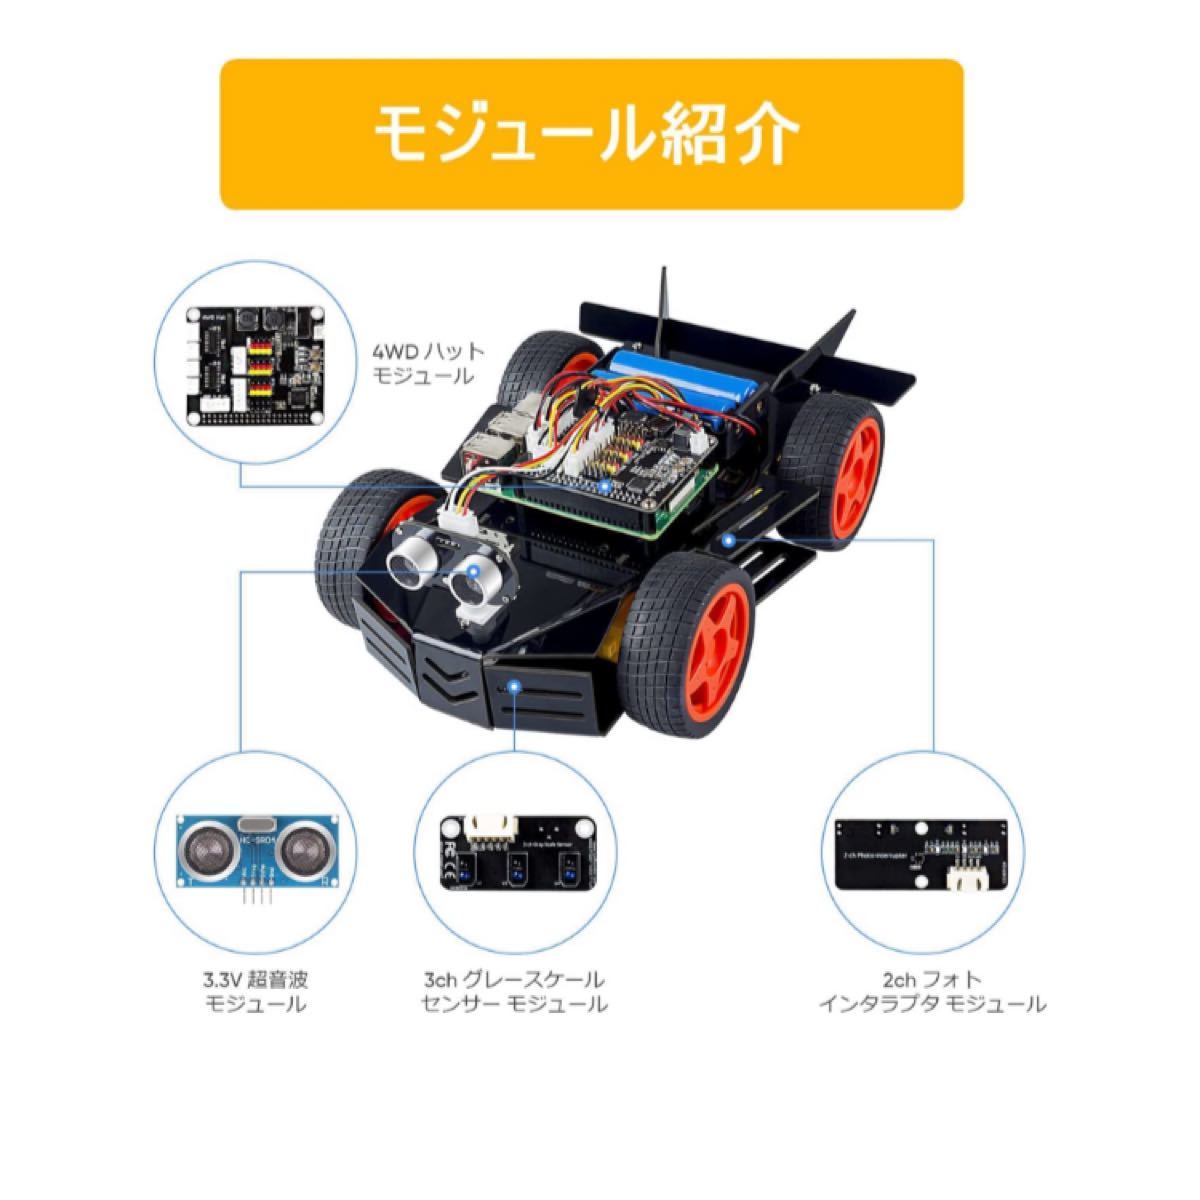 SunFounder Raspberry Pi プログラミングロボットカーキット 10代と大人向けの電子DIYロボットキット